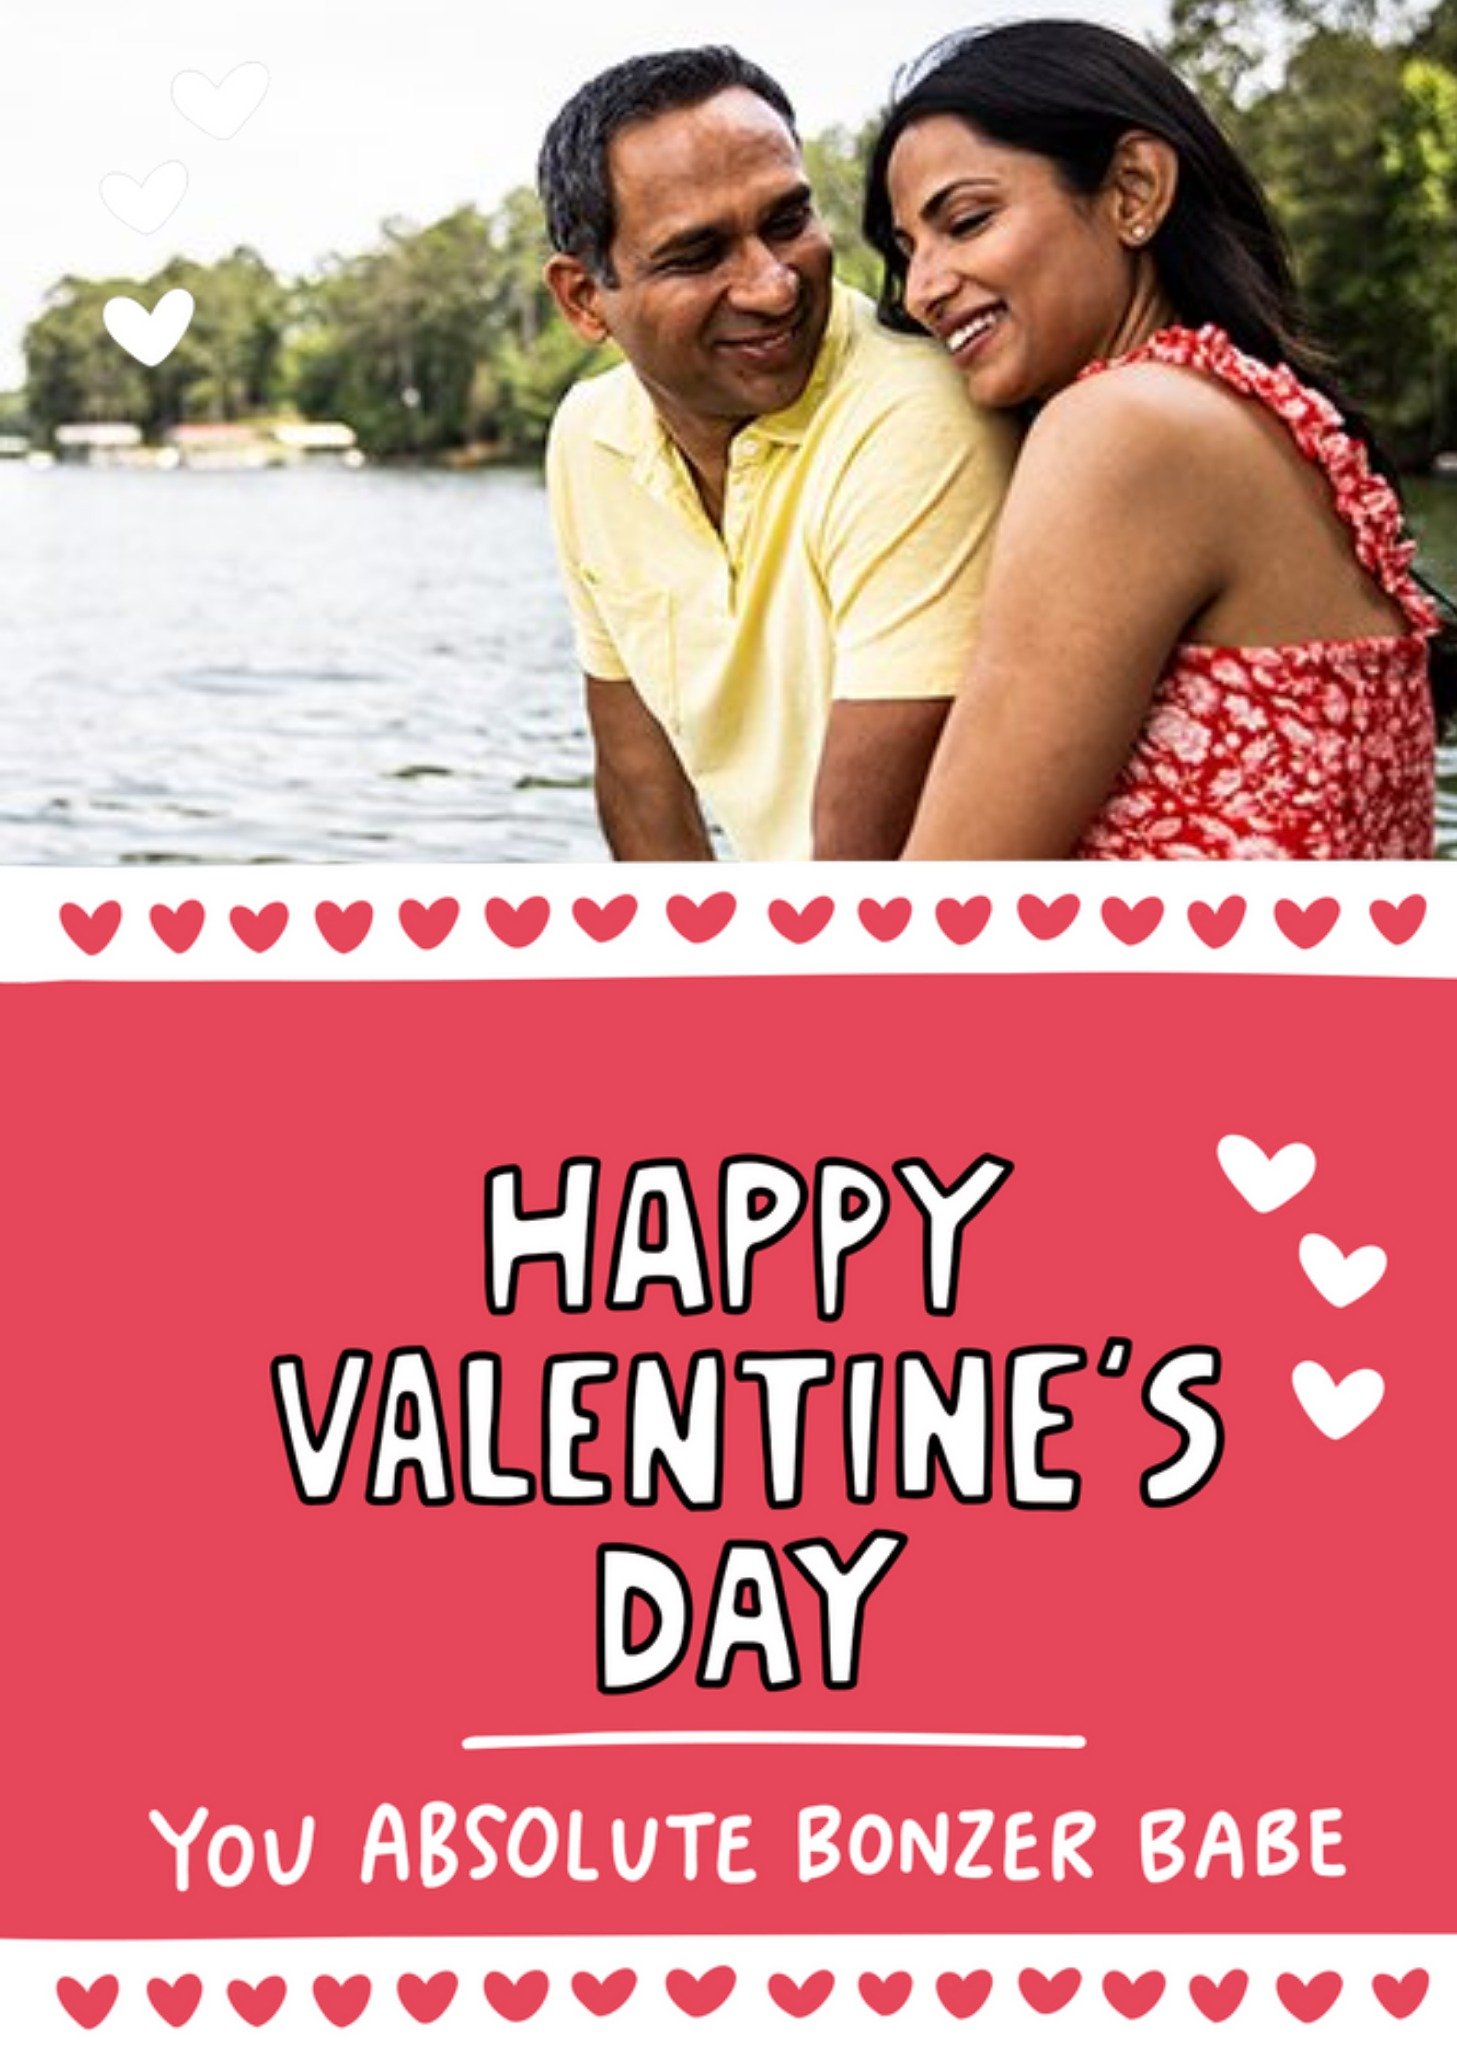 Love Hearts Angela Chick Illustration Valentine's Day Photo Upload Hearts Card, Large